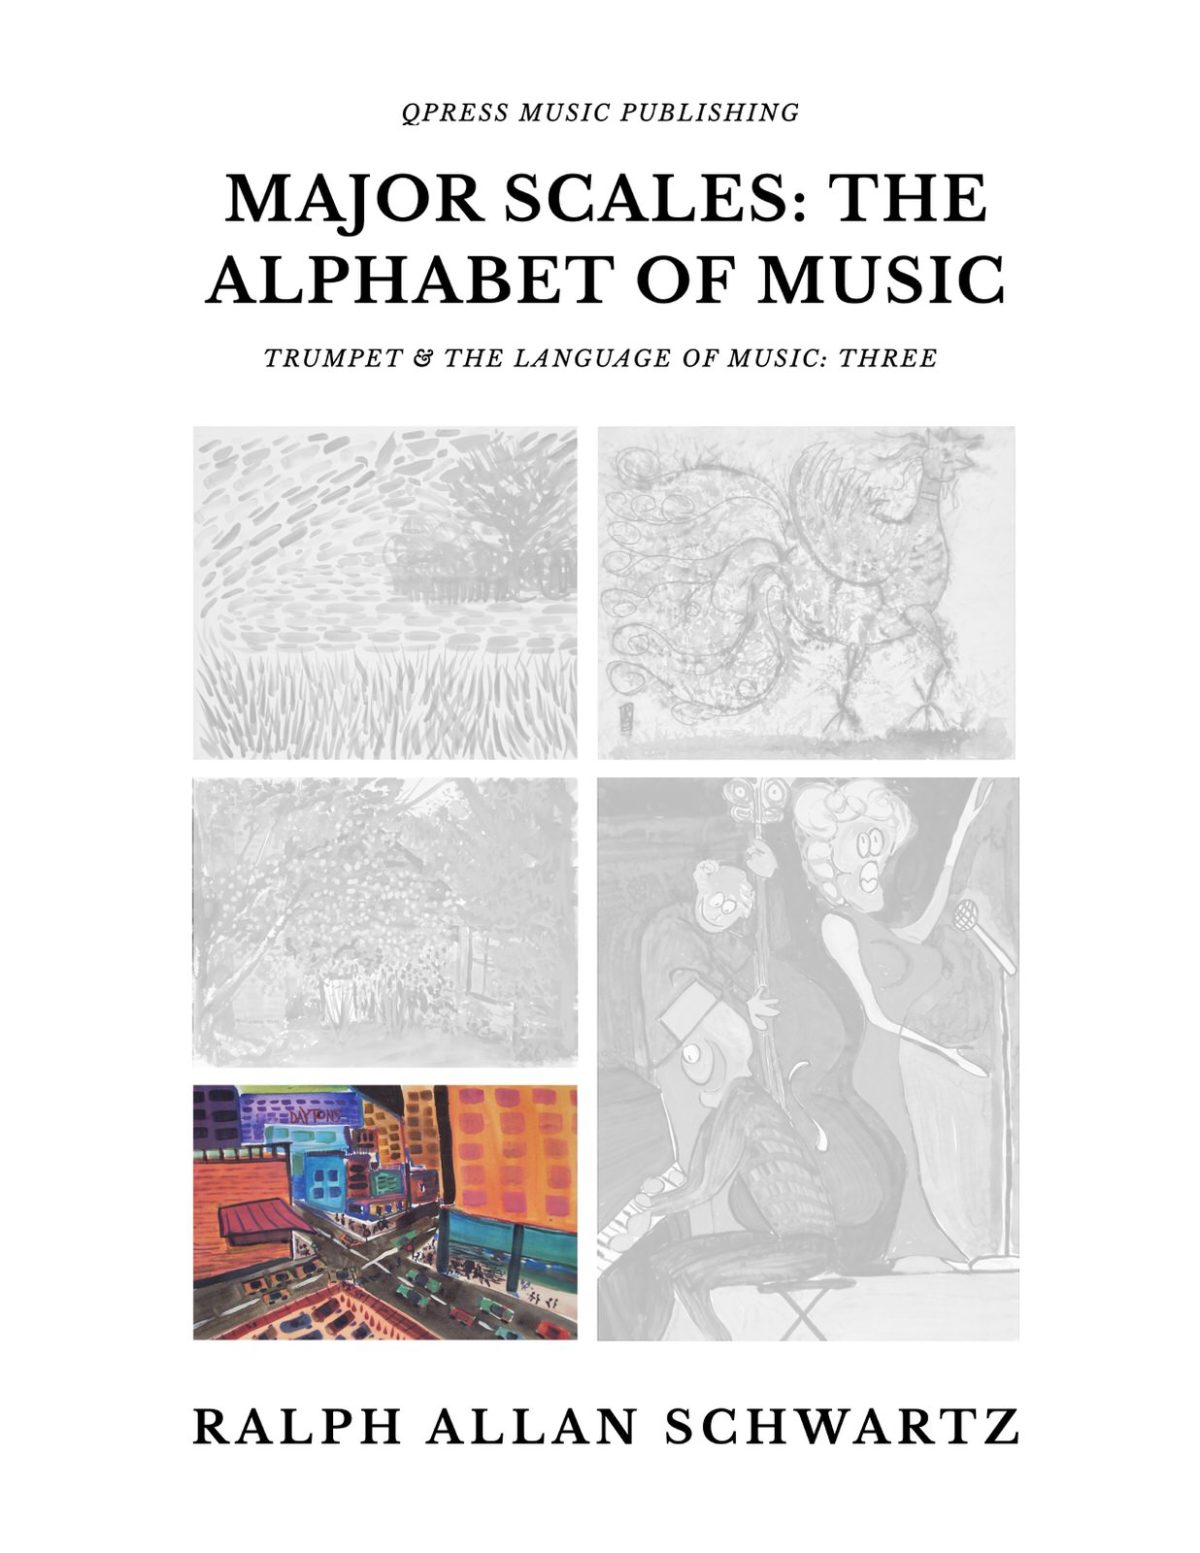 Schwartz, TLM 3, Major Scales The Alphabet of Music-p001